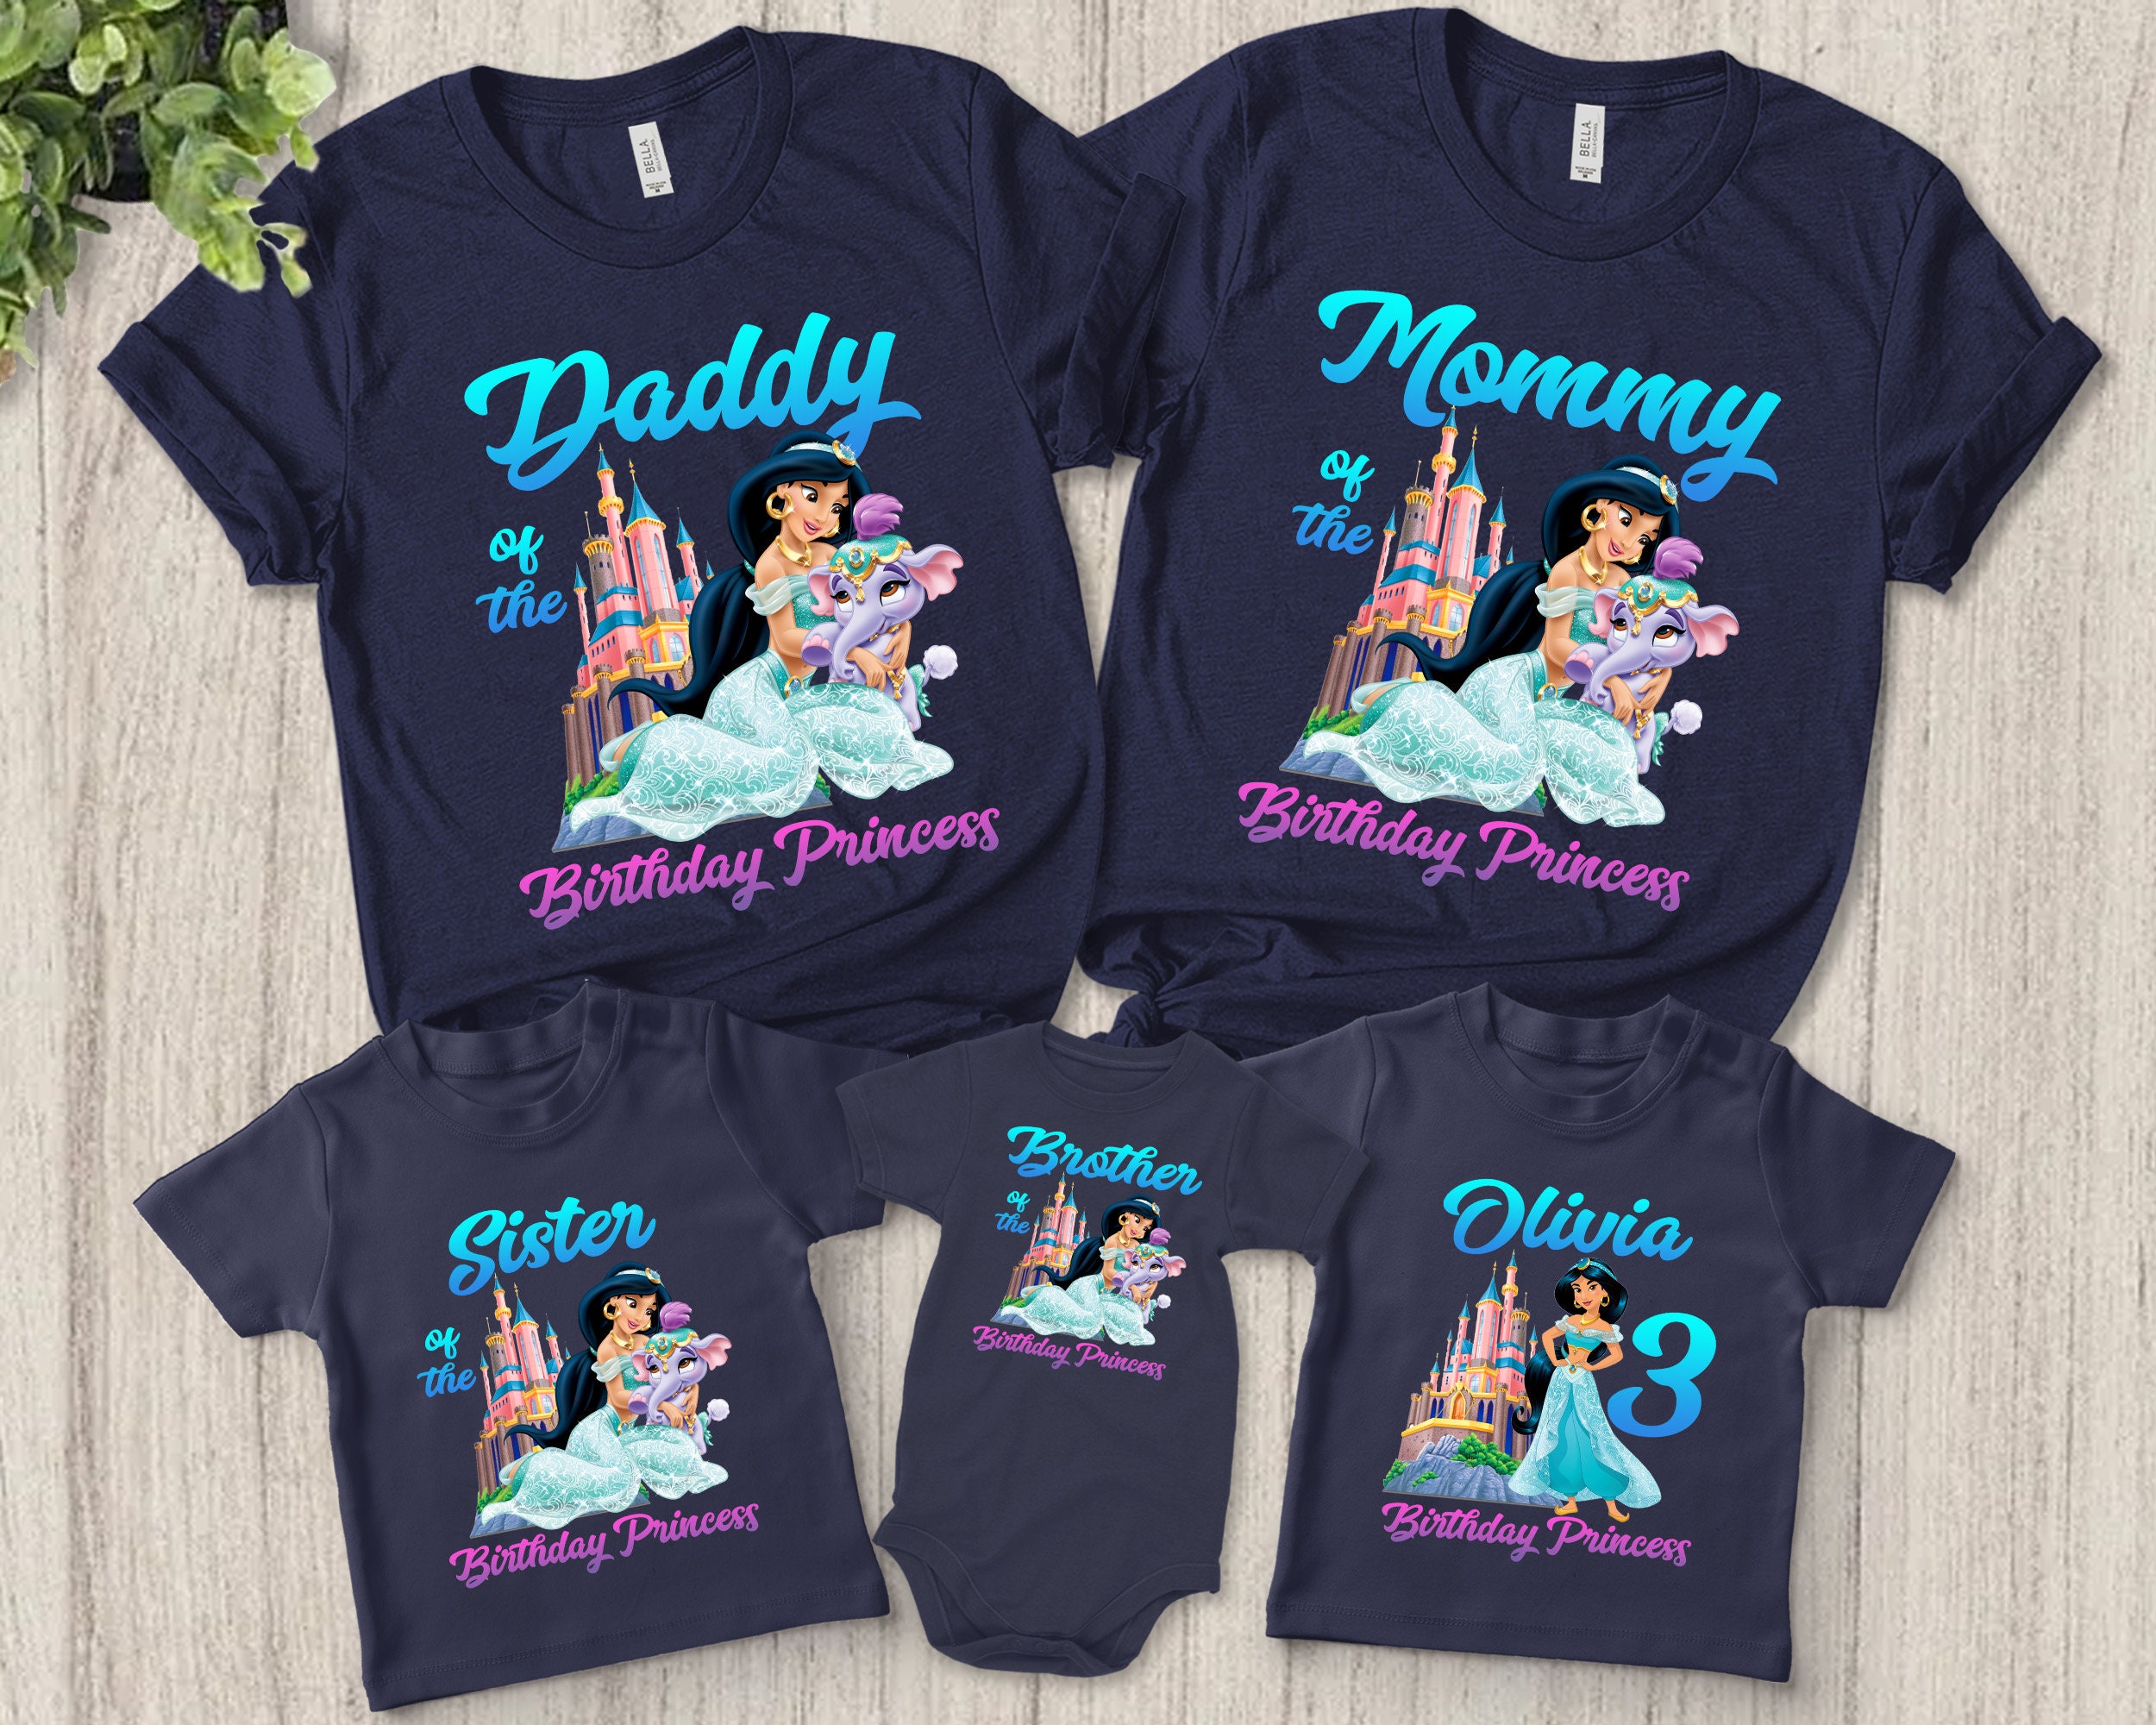 Princess Jasmine Birthday Shirt, Aladdin Birthday Shirt, Jasmine Birthday Outfit, Aladdin Birthday Party, Jasmine Birthday Party